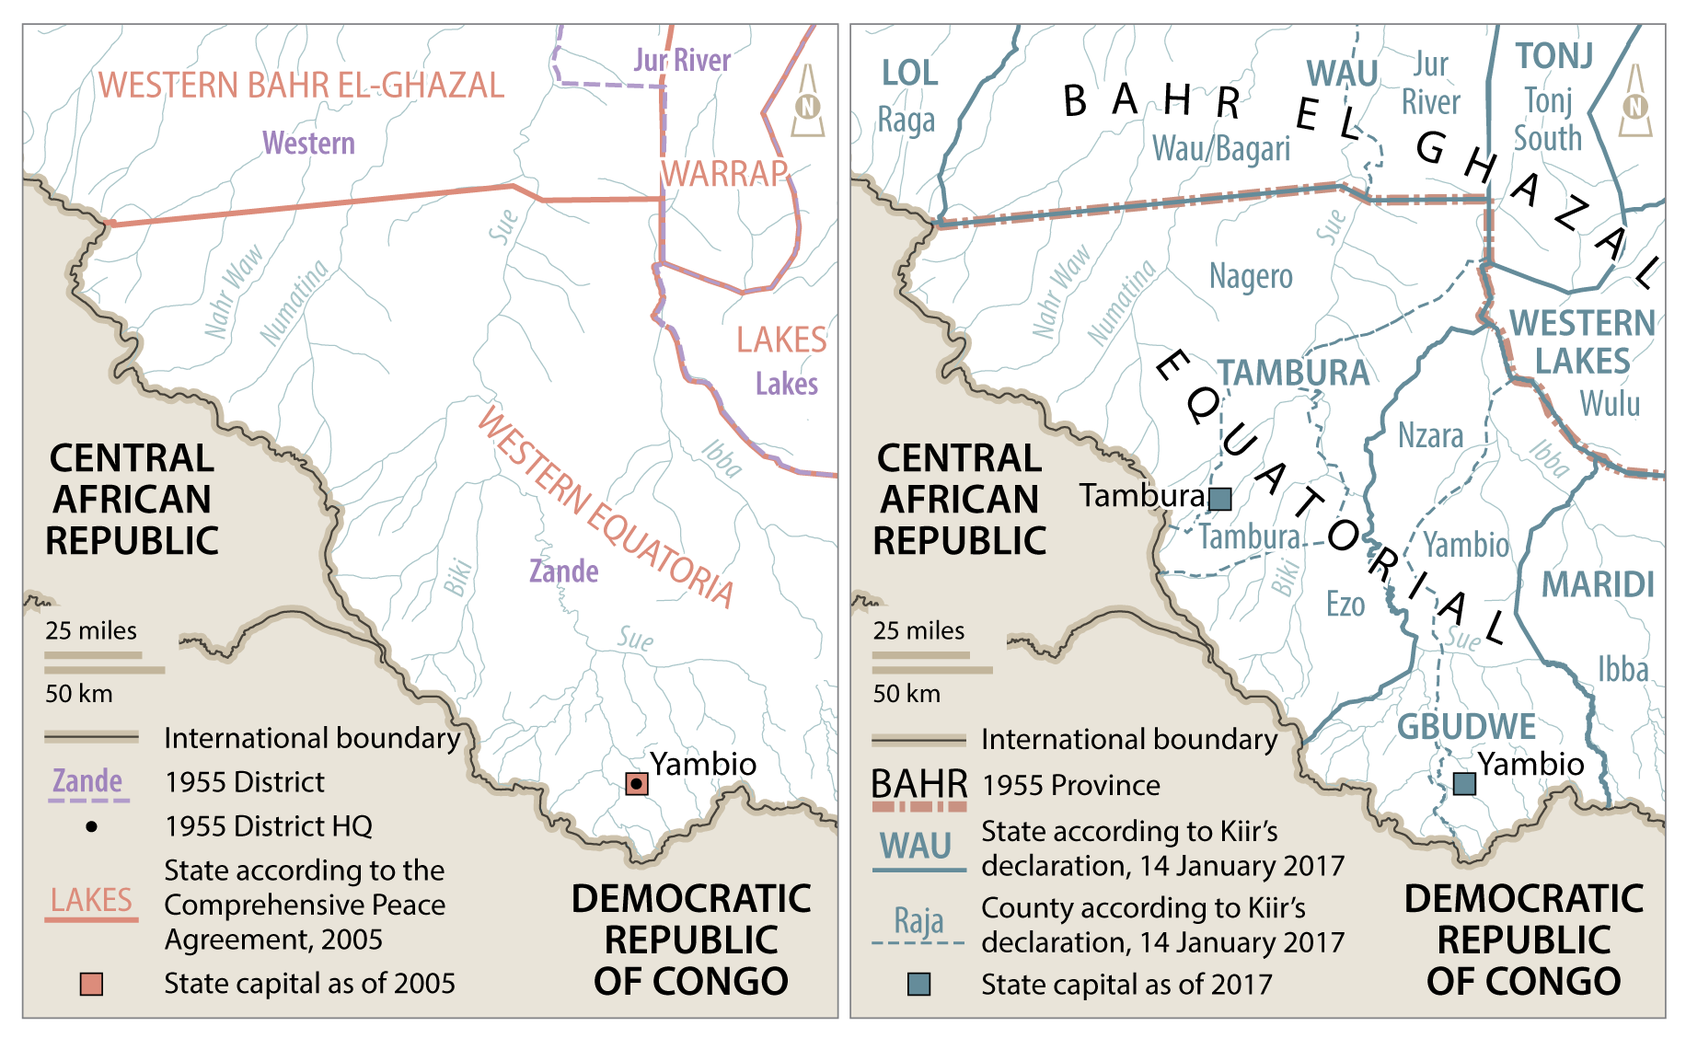 Boundaries of Western Equatoria, Tambura and Gbudwe, 1955-2017 (Credit: MAPgrafix 2019/OpenStreetMap)